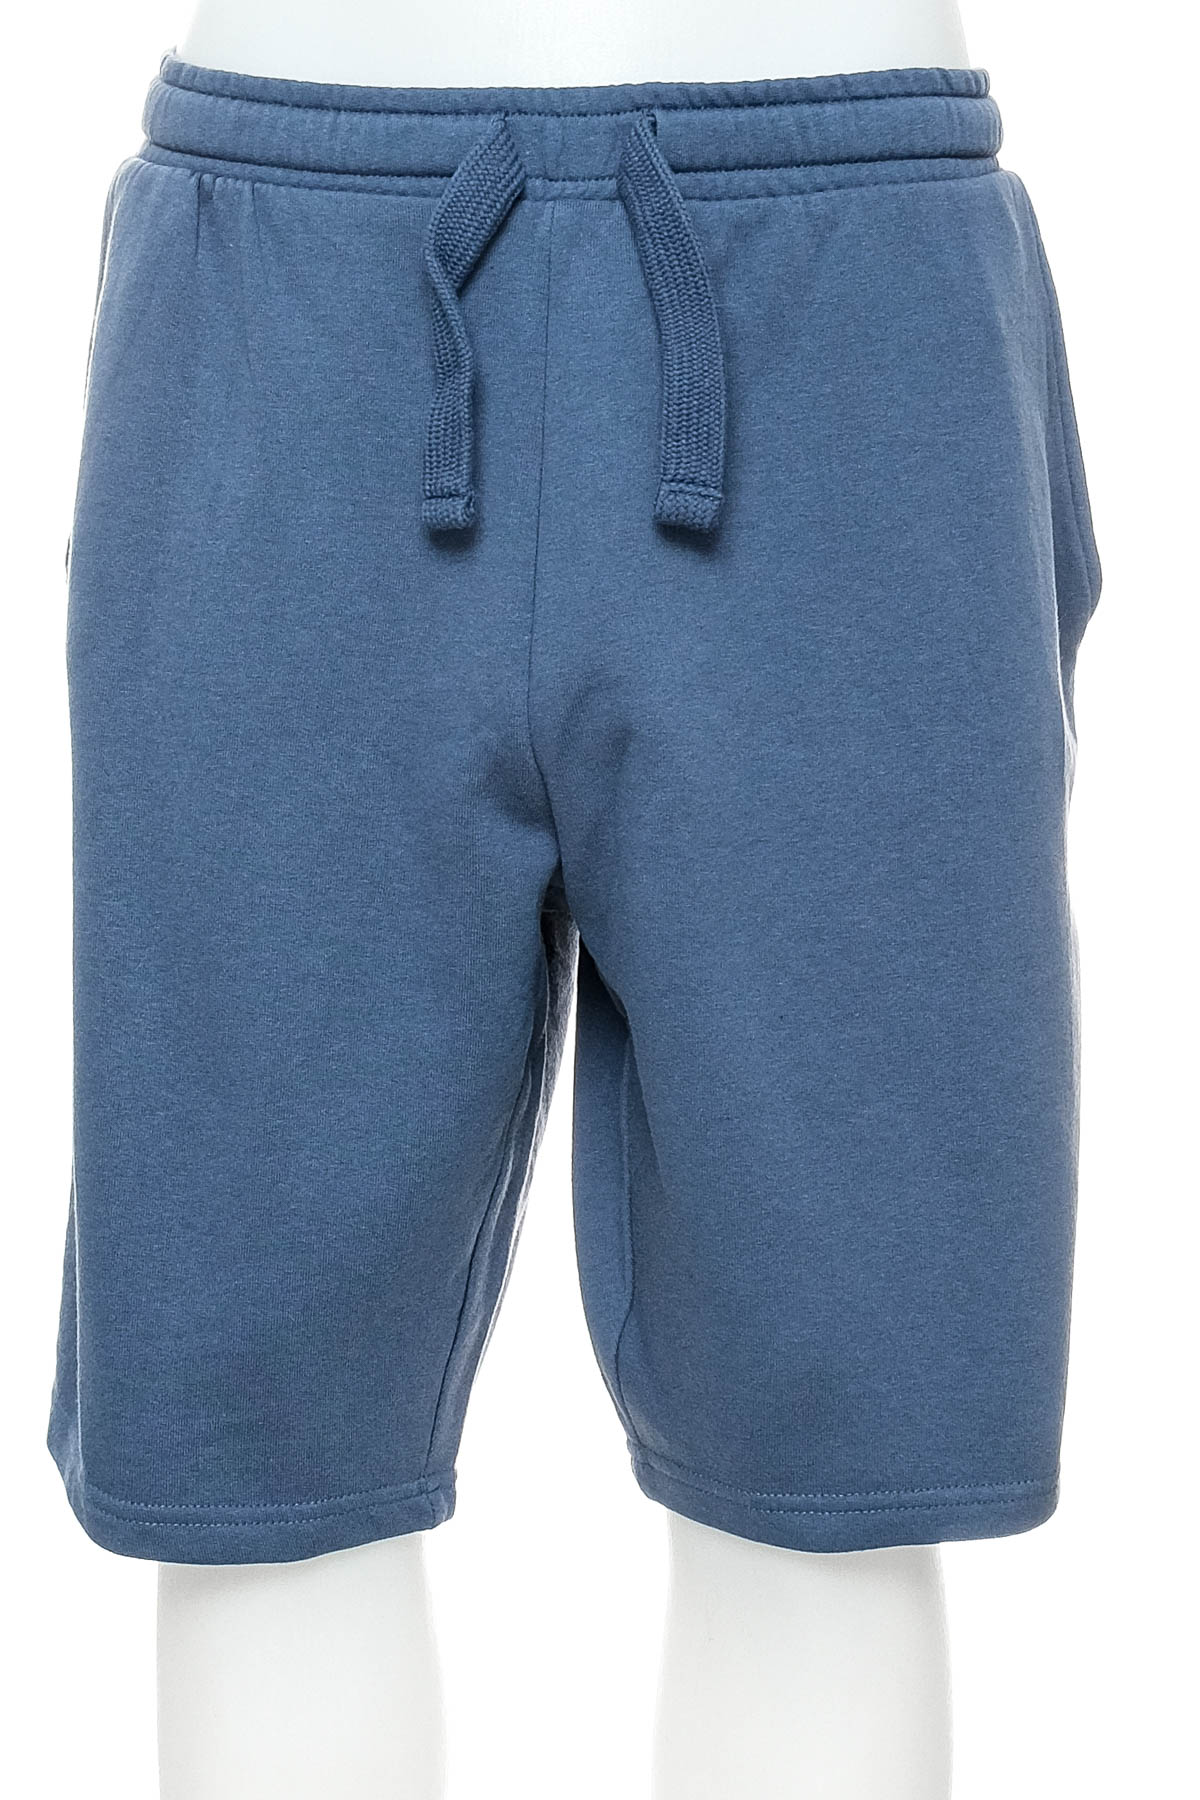 Men's shorts - Bpc Bonprix Collection - 0